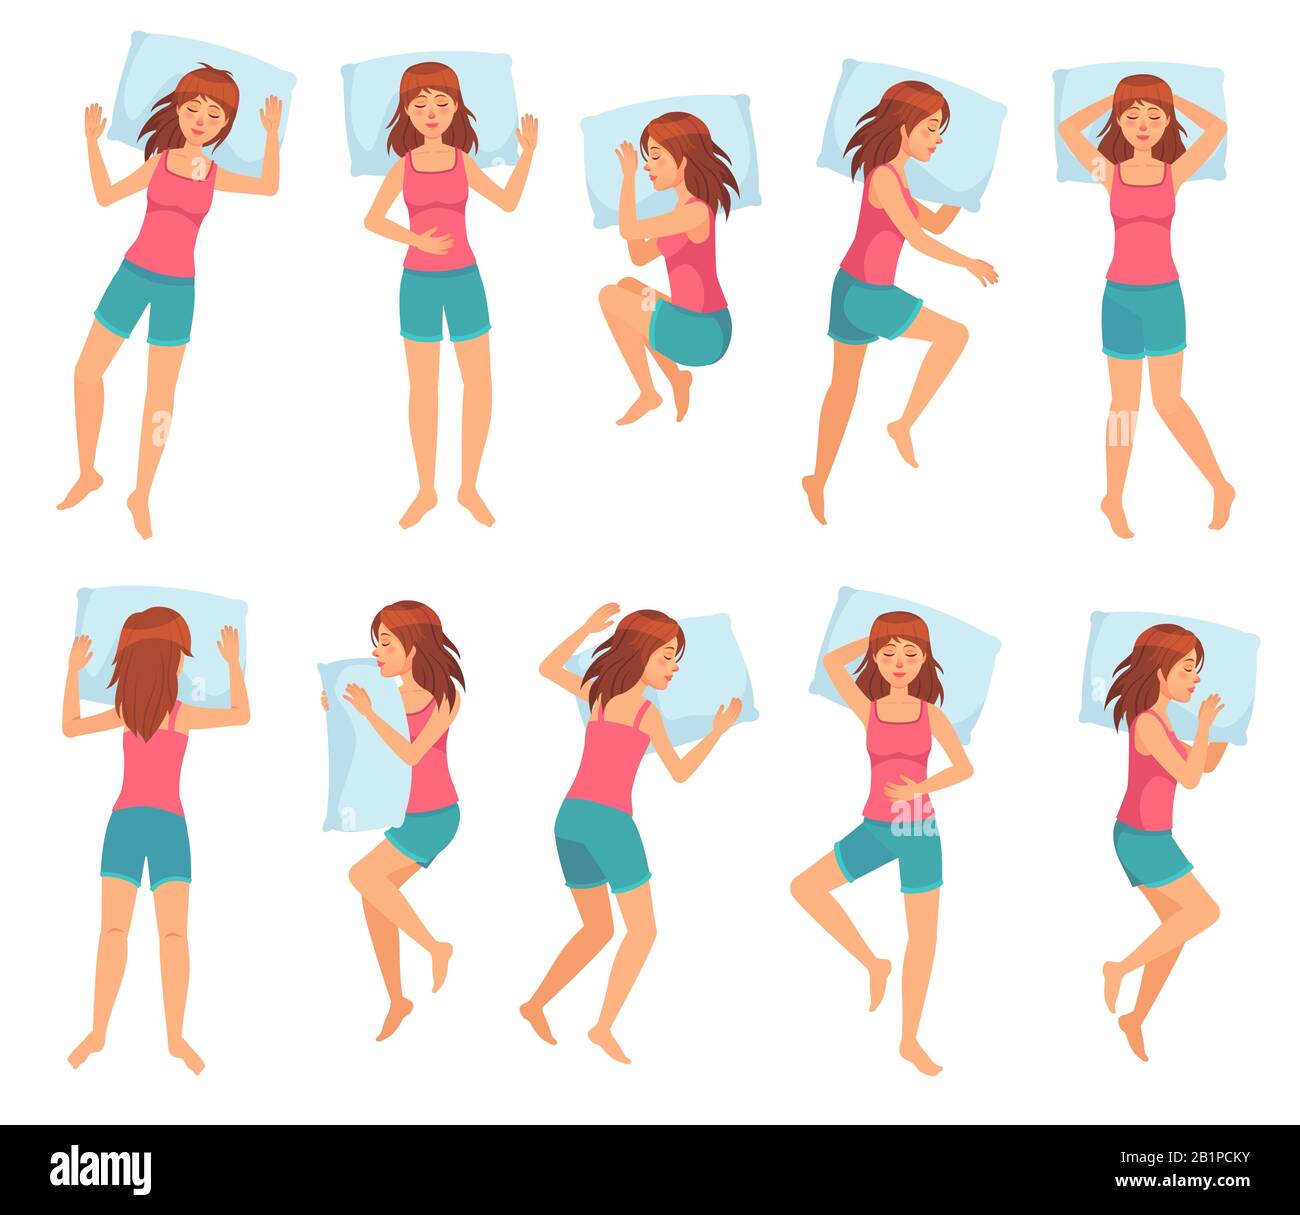 Woman sleeps in different poses. Healthy night sleep, sleeping pose and female character sleep on pillow cartoon vector illustration set Stock Vector